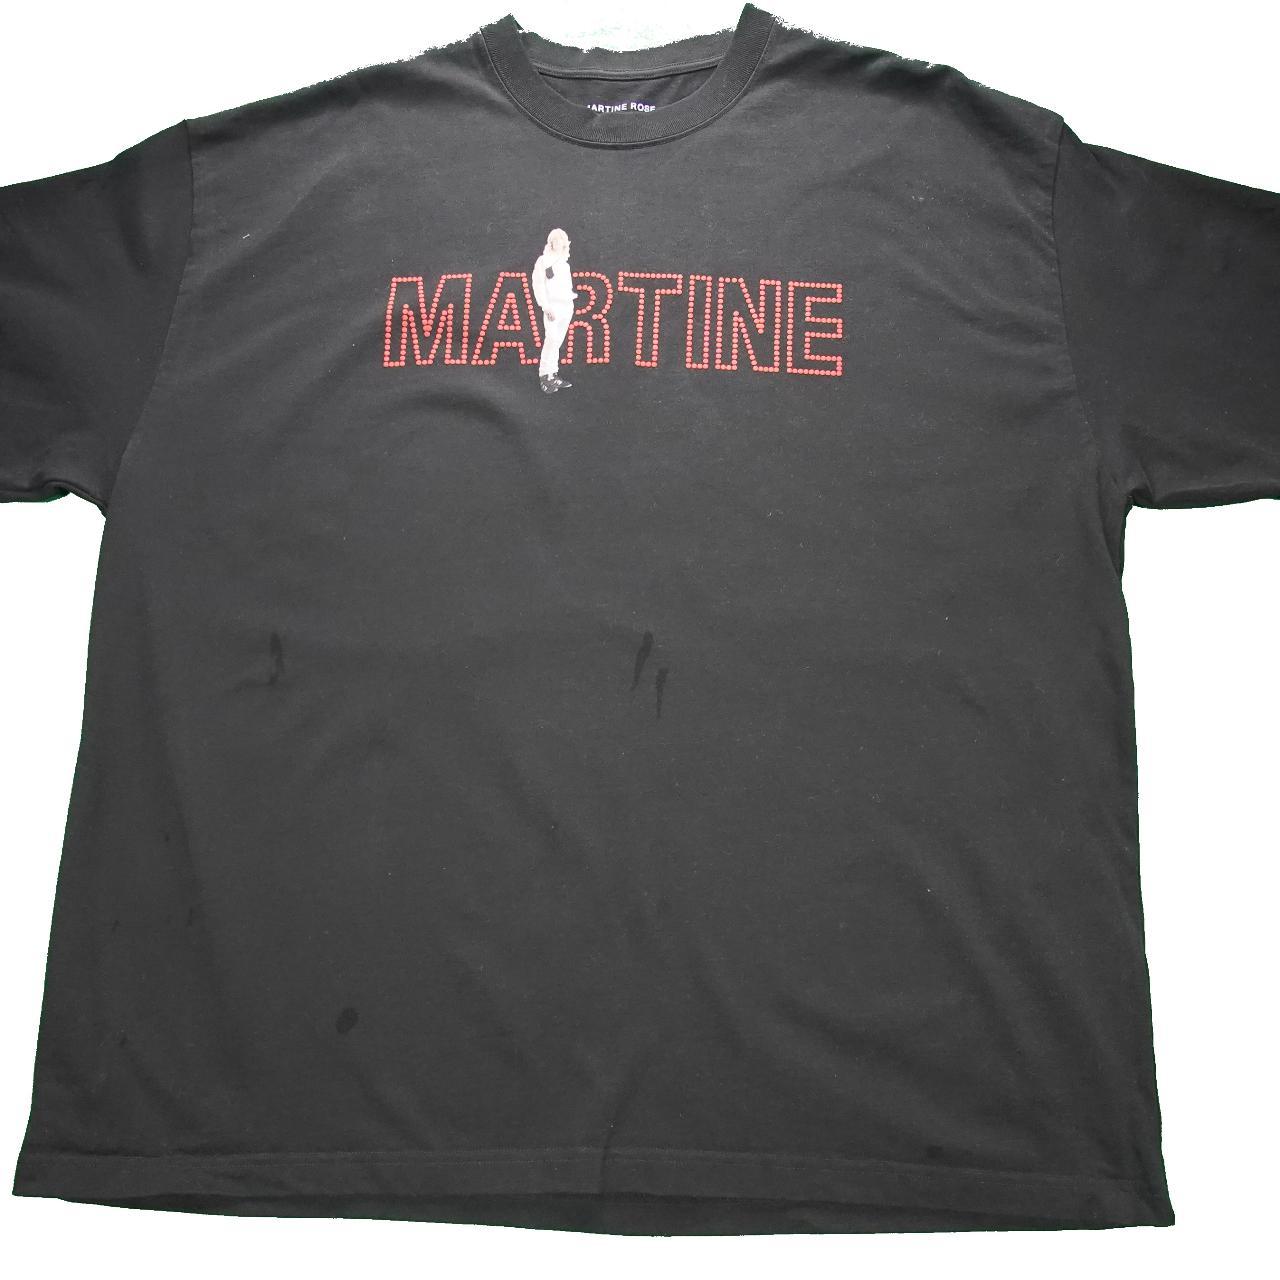 Product Image 2 - Martine Rose Brittle MARTINE T-Shirt